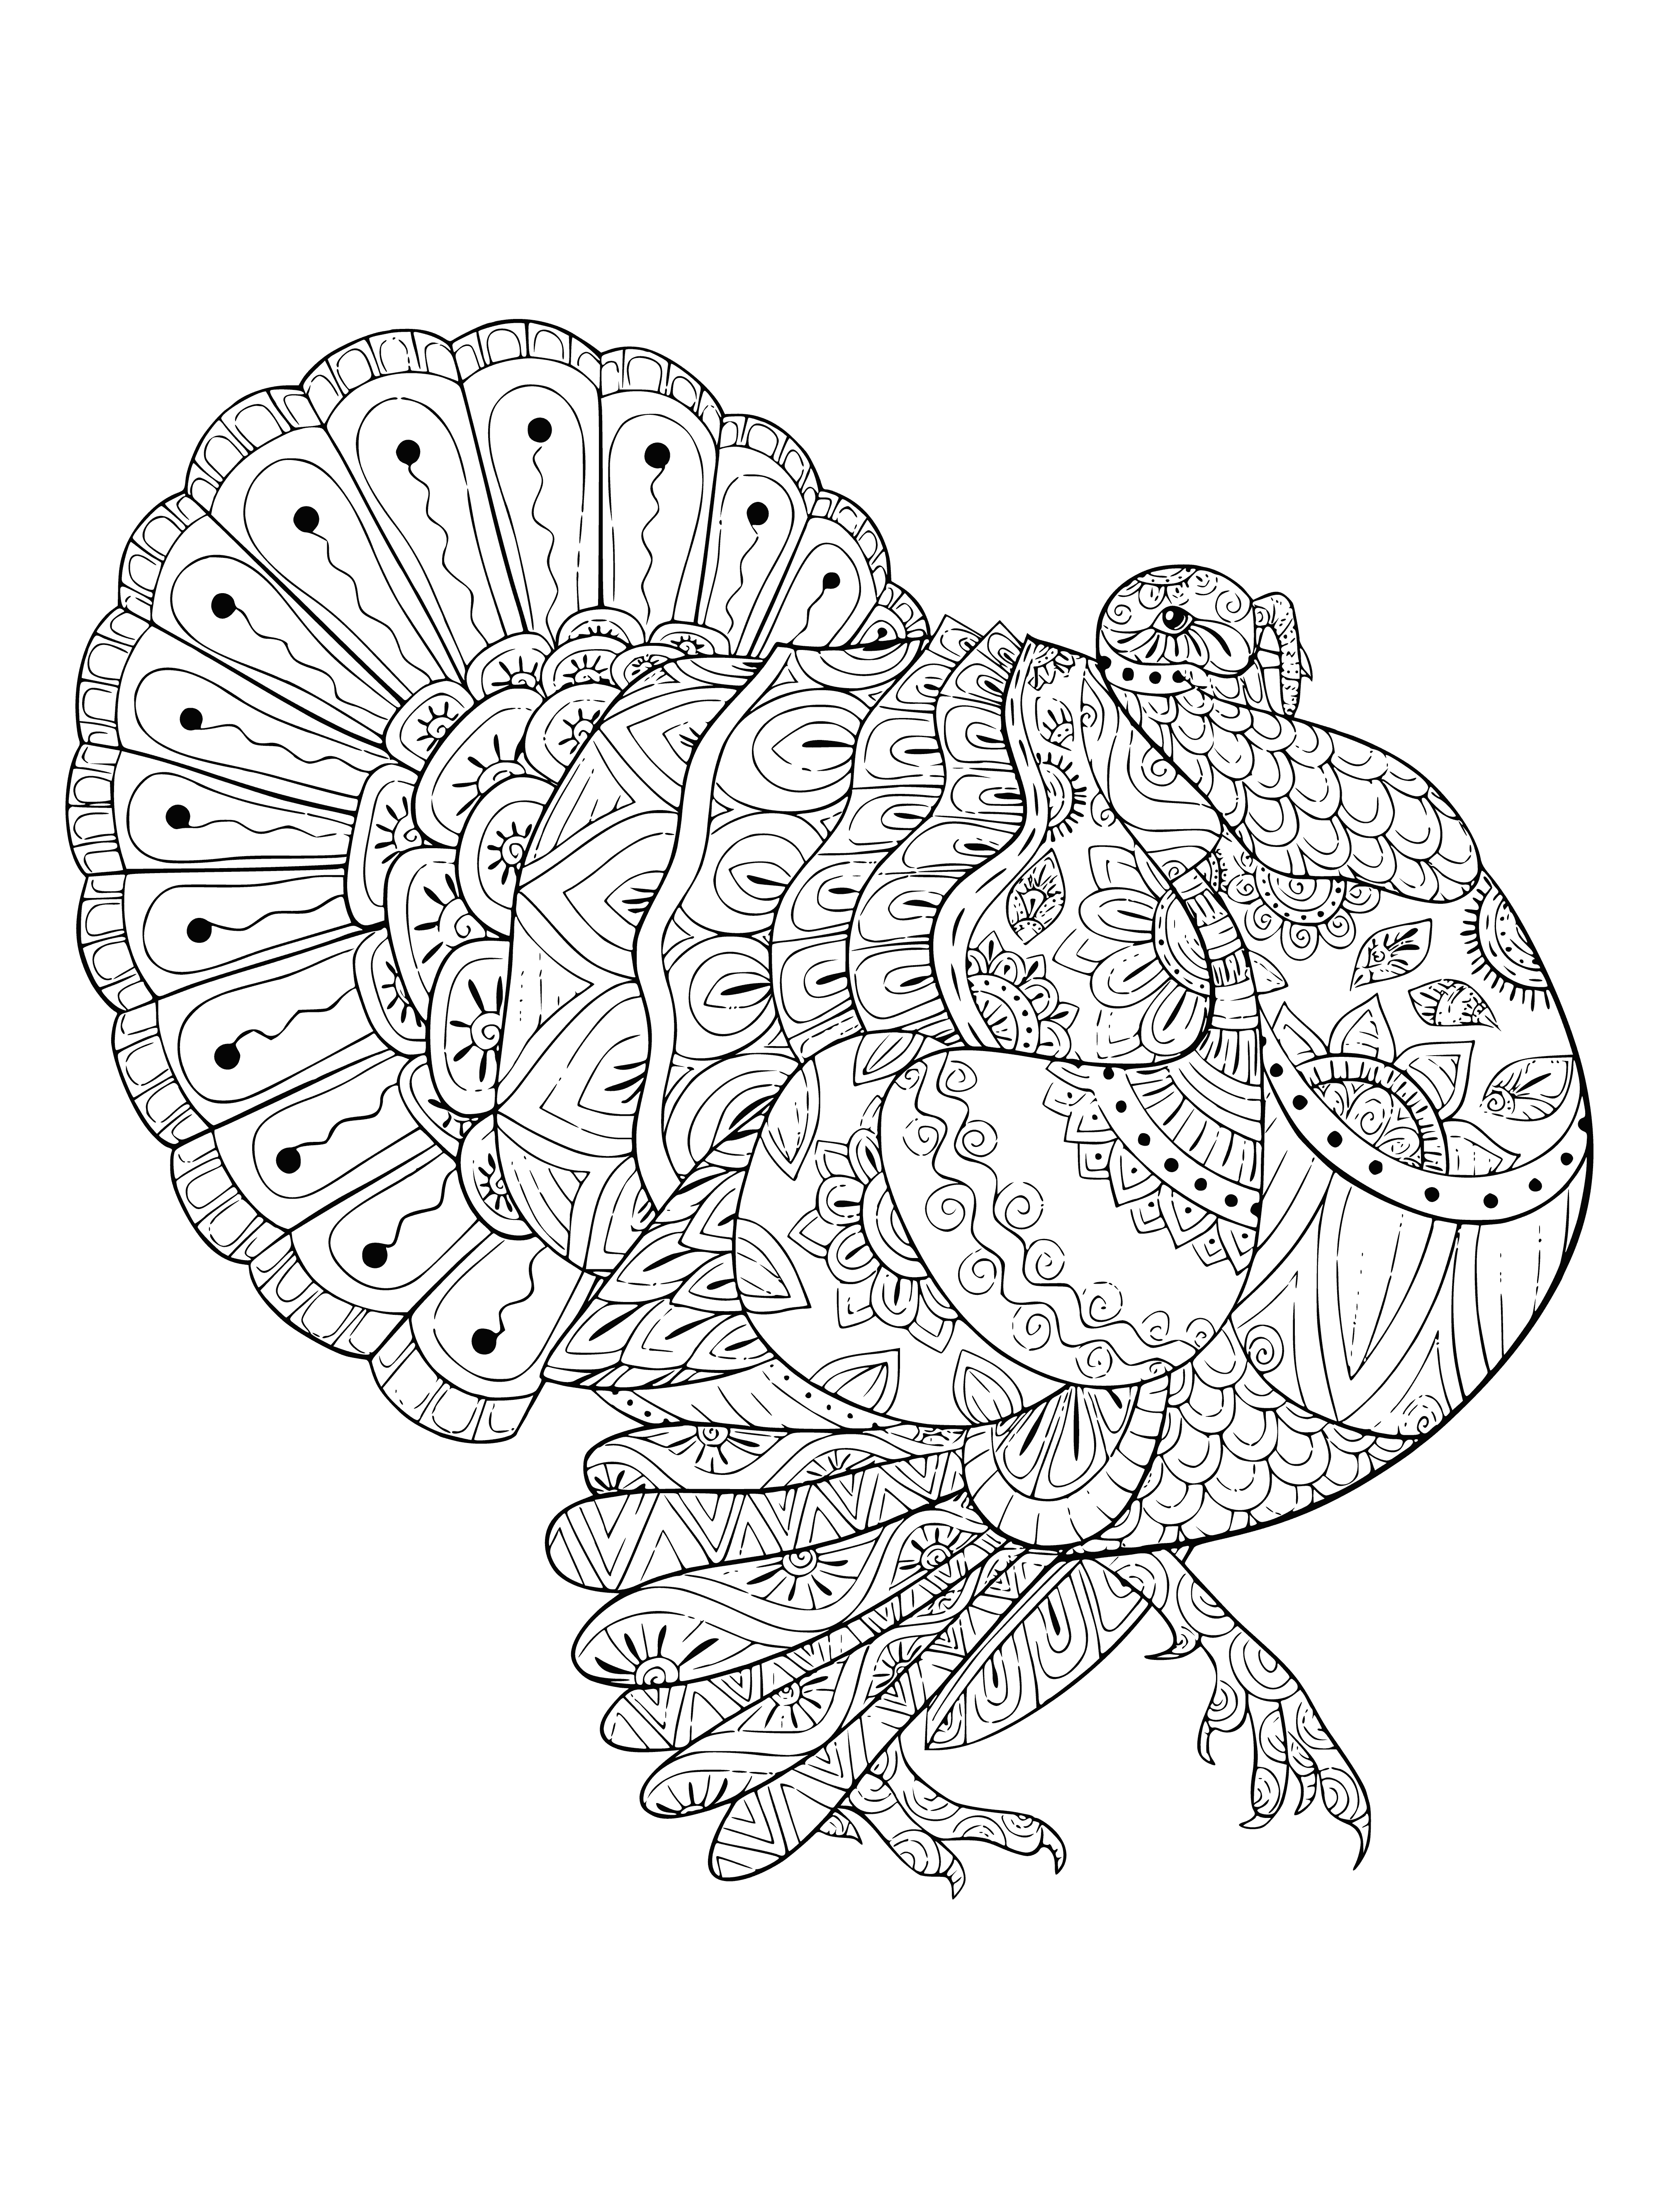 coloring page: Cartoon turkey with long legs, wings, tail, neck, beak, & black eyes has pattern of colors.